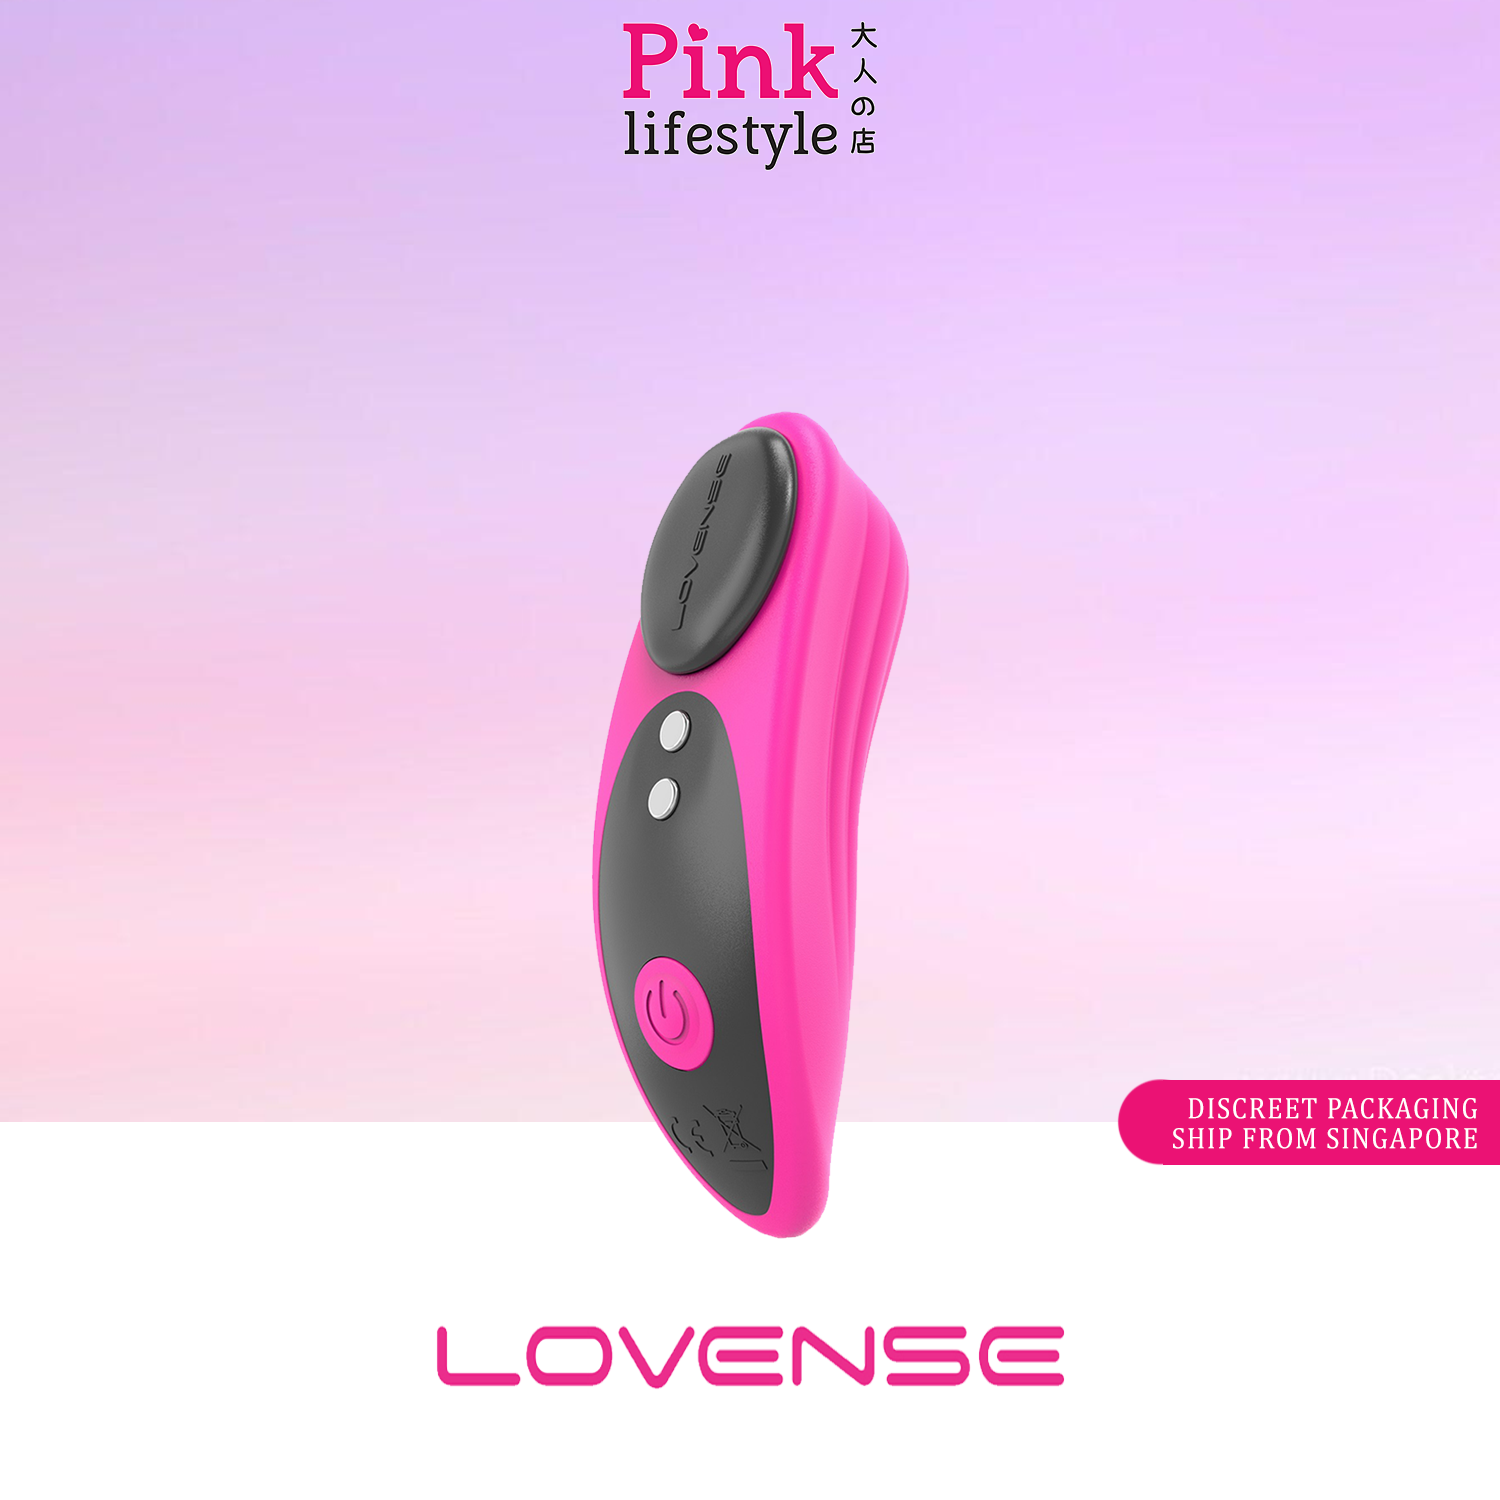 Lovense Ferri, App-Controlled Panty Vibrator